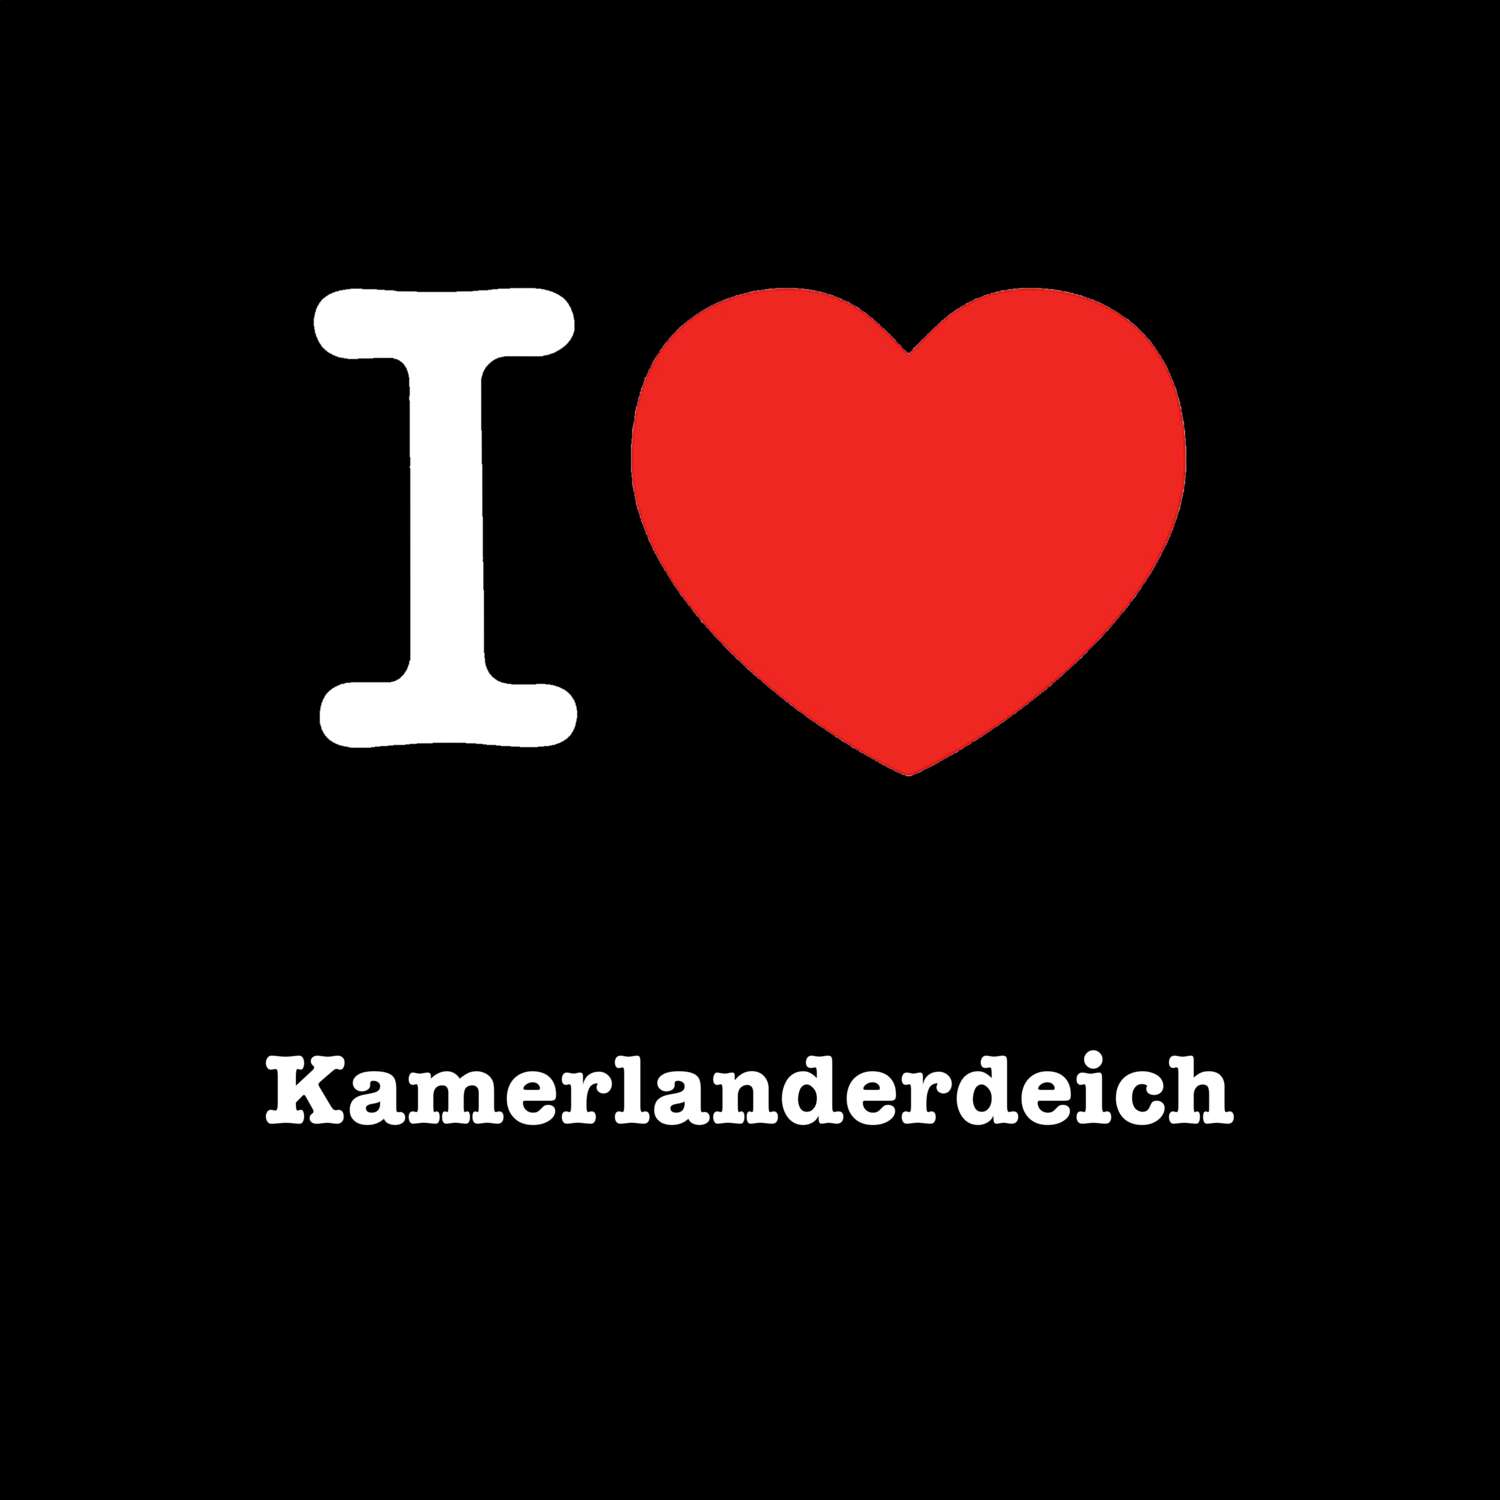 Kamerlanderdeich T-Shirt »I love«